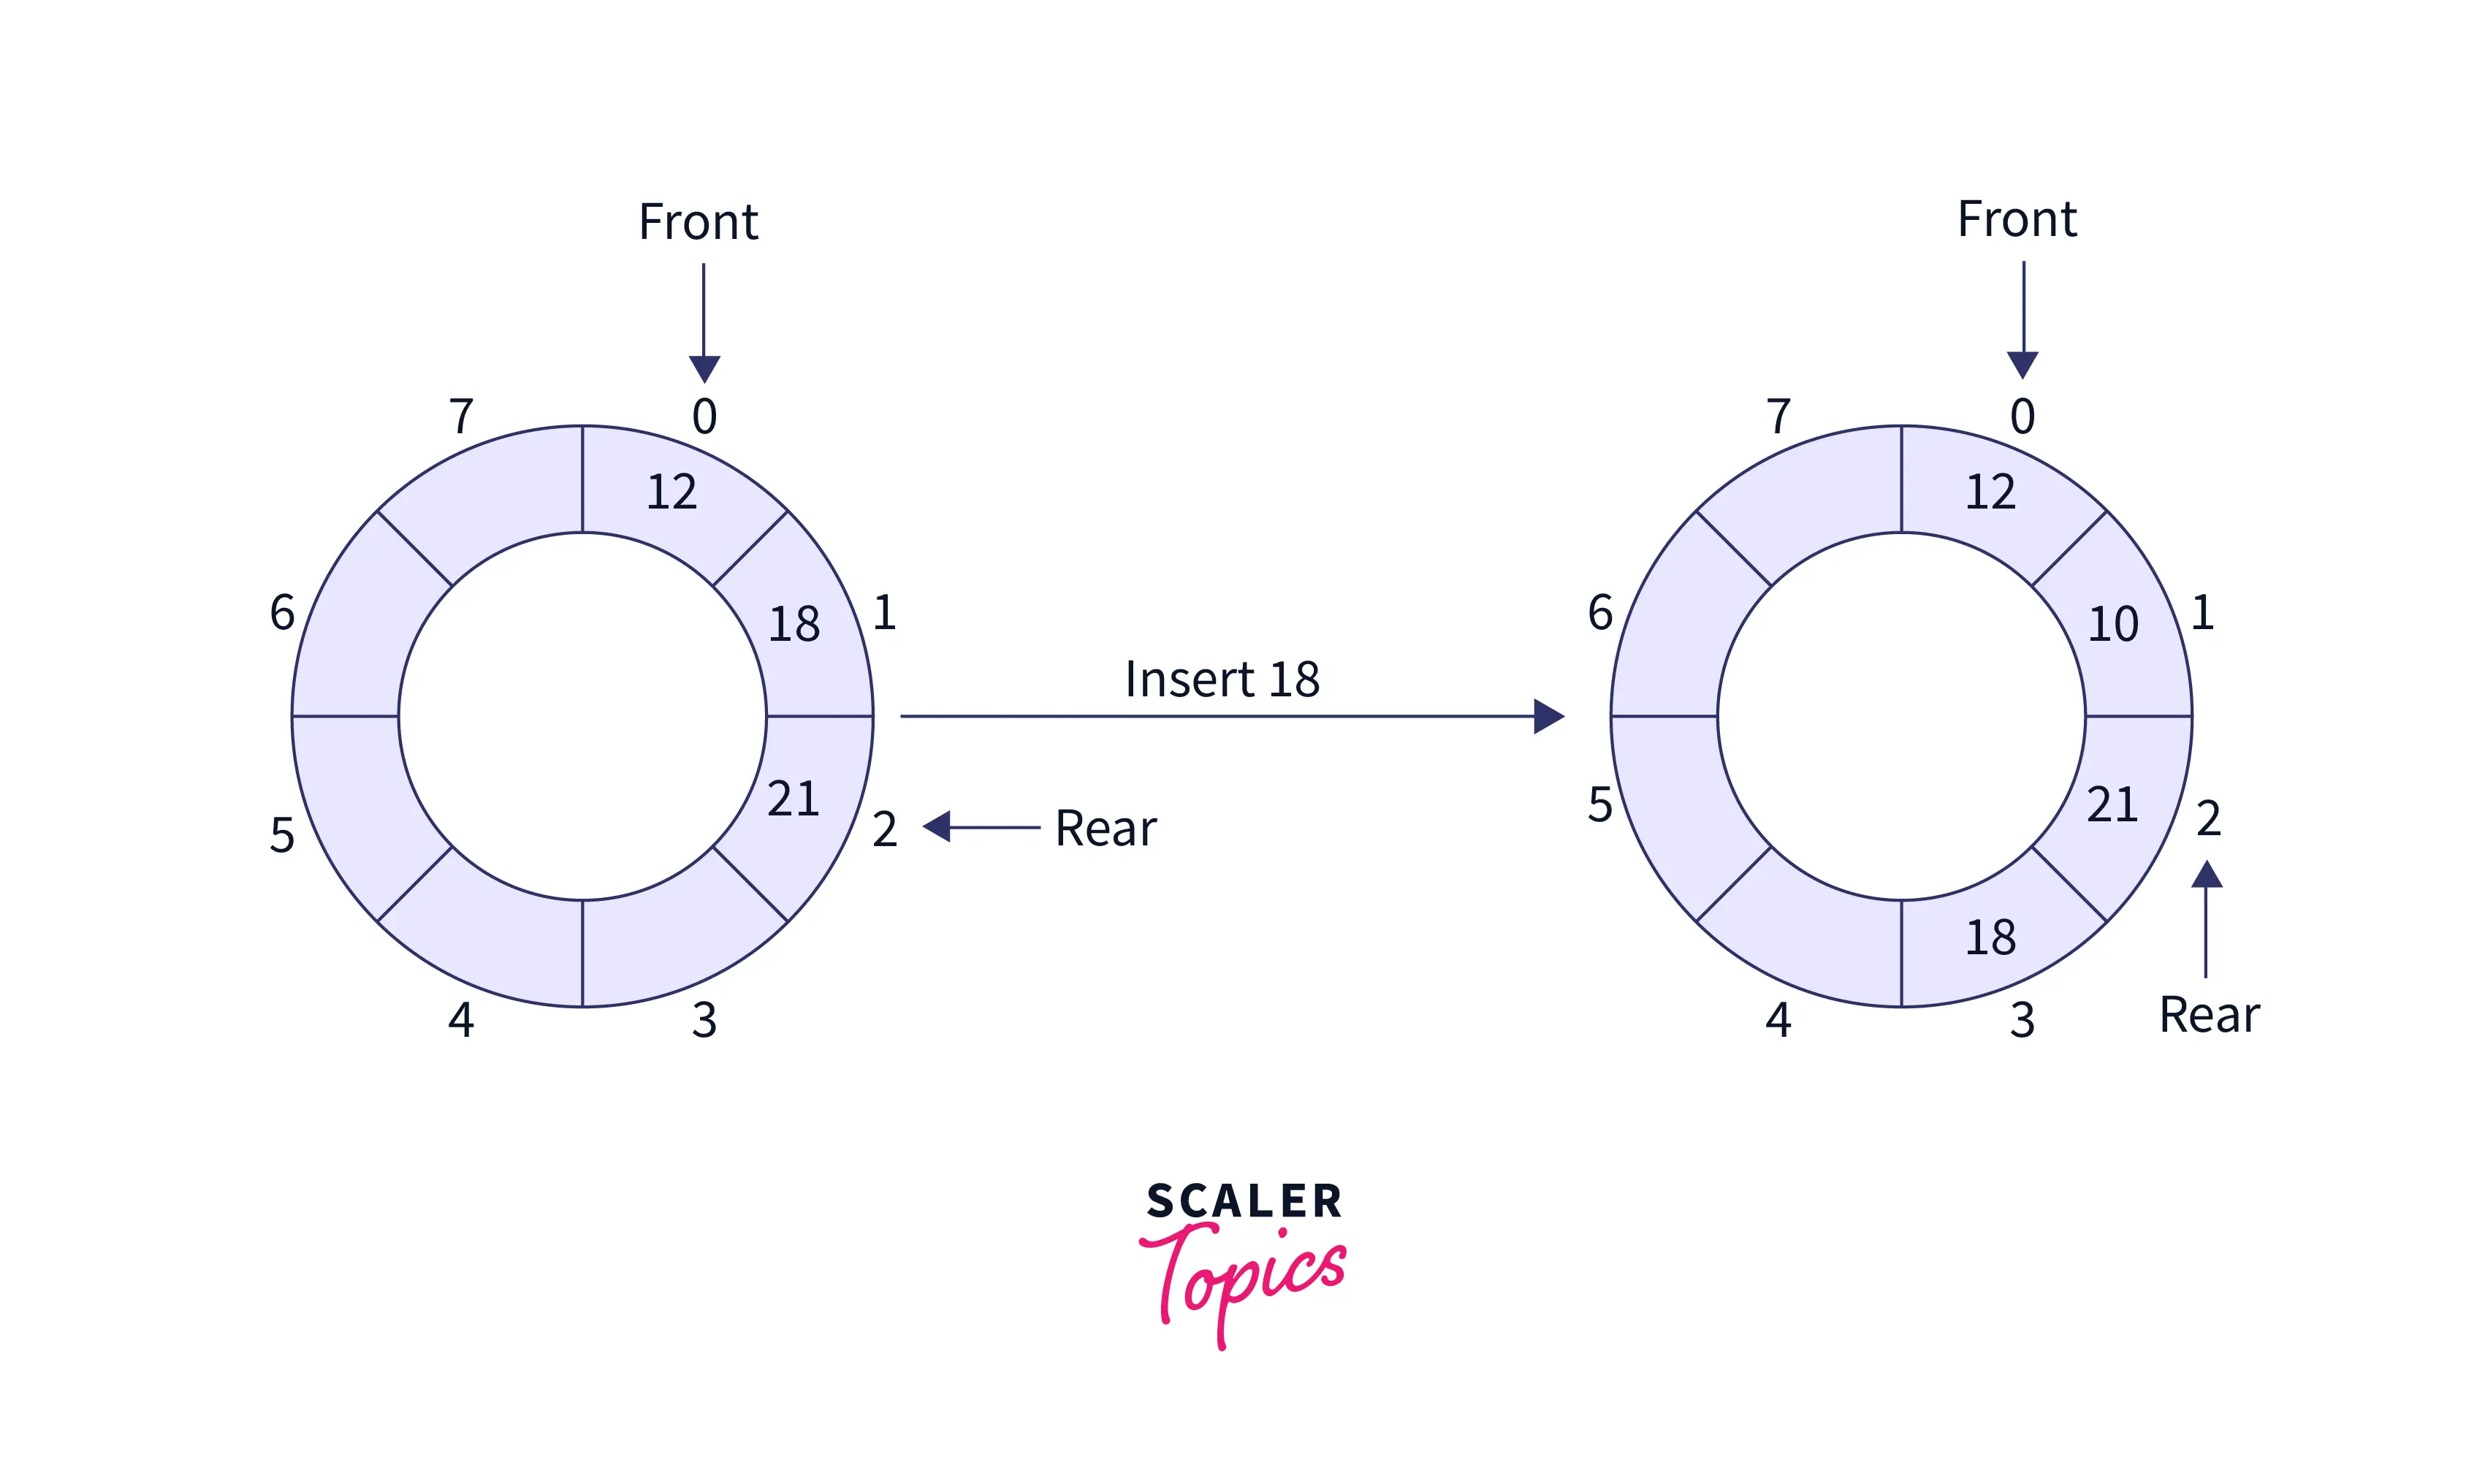 insertion-when-some-element-present-circular-queue